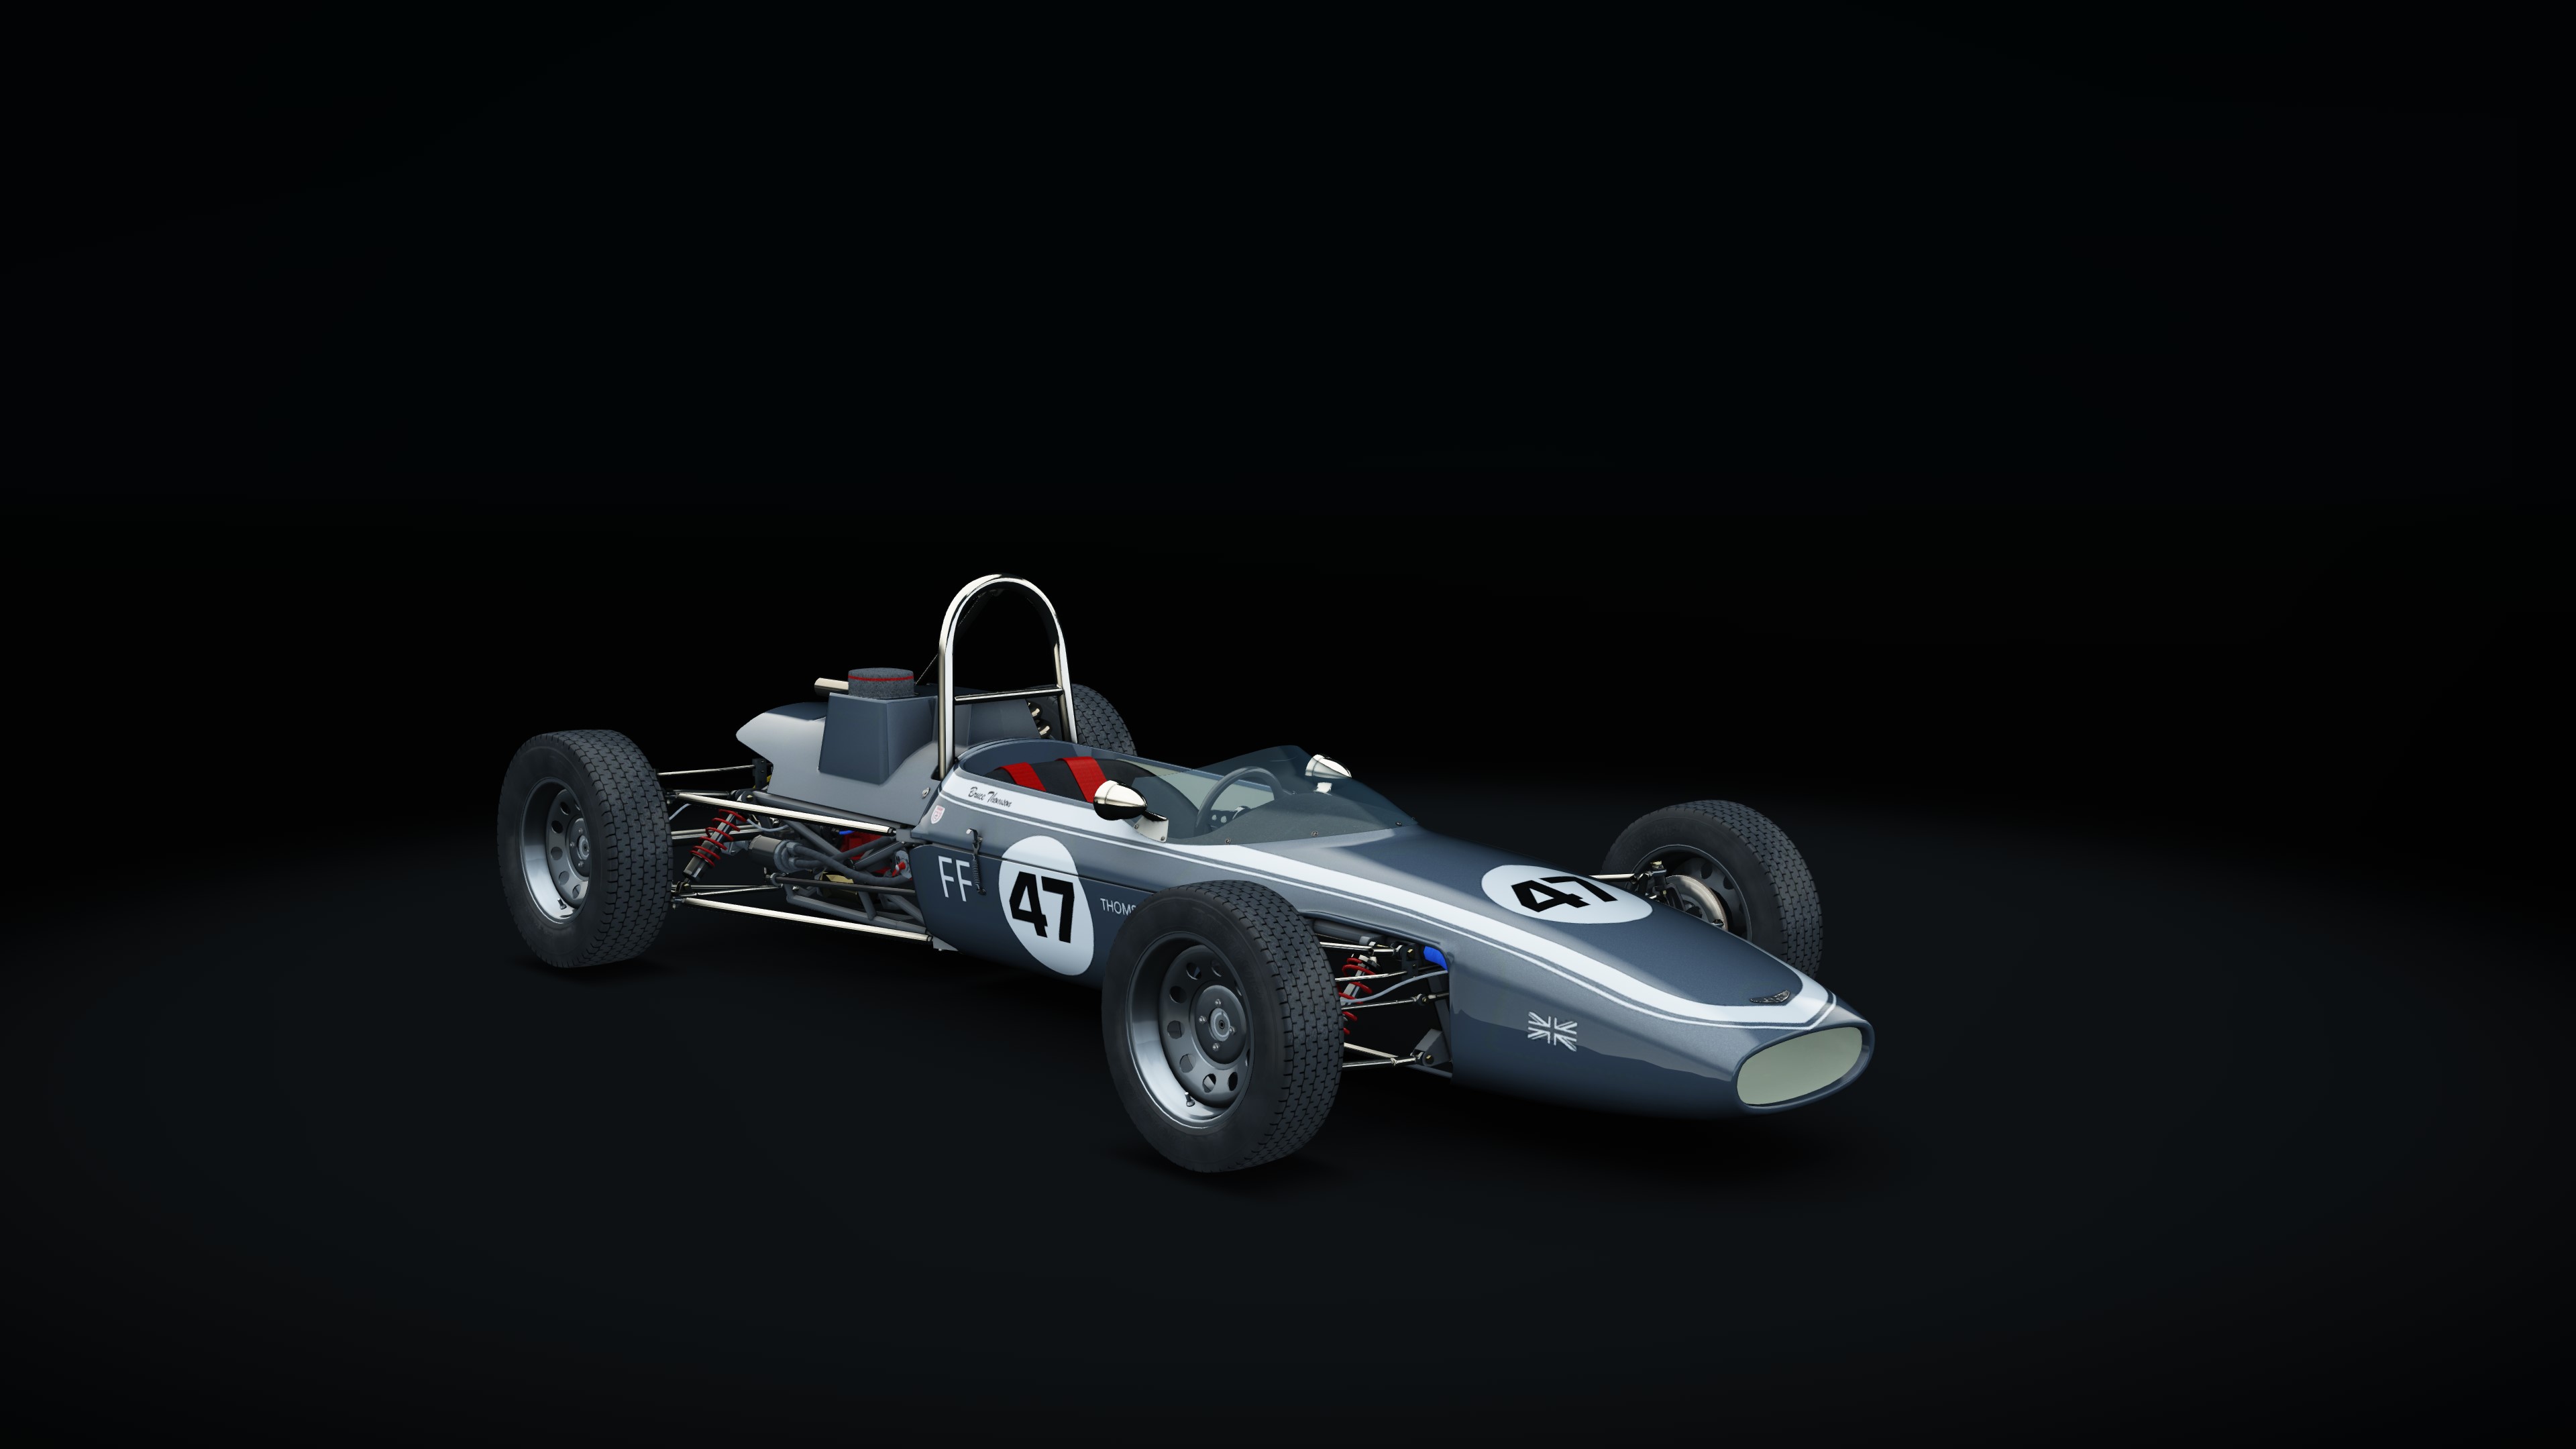 Russell-Alexis Mk. 14 Formula Ford, skin 47BThomson